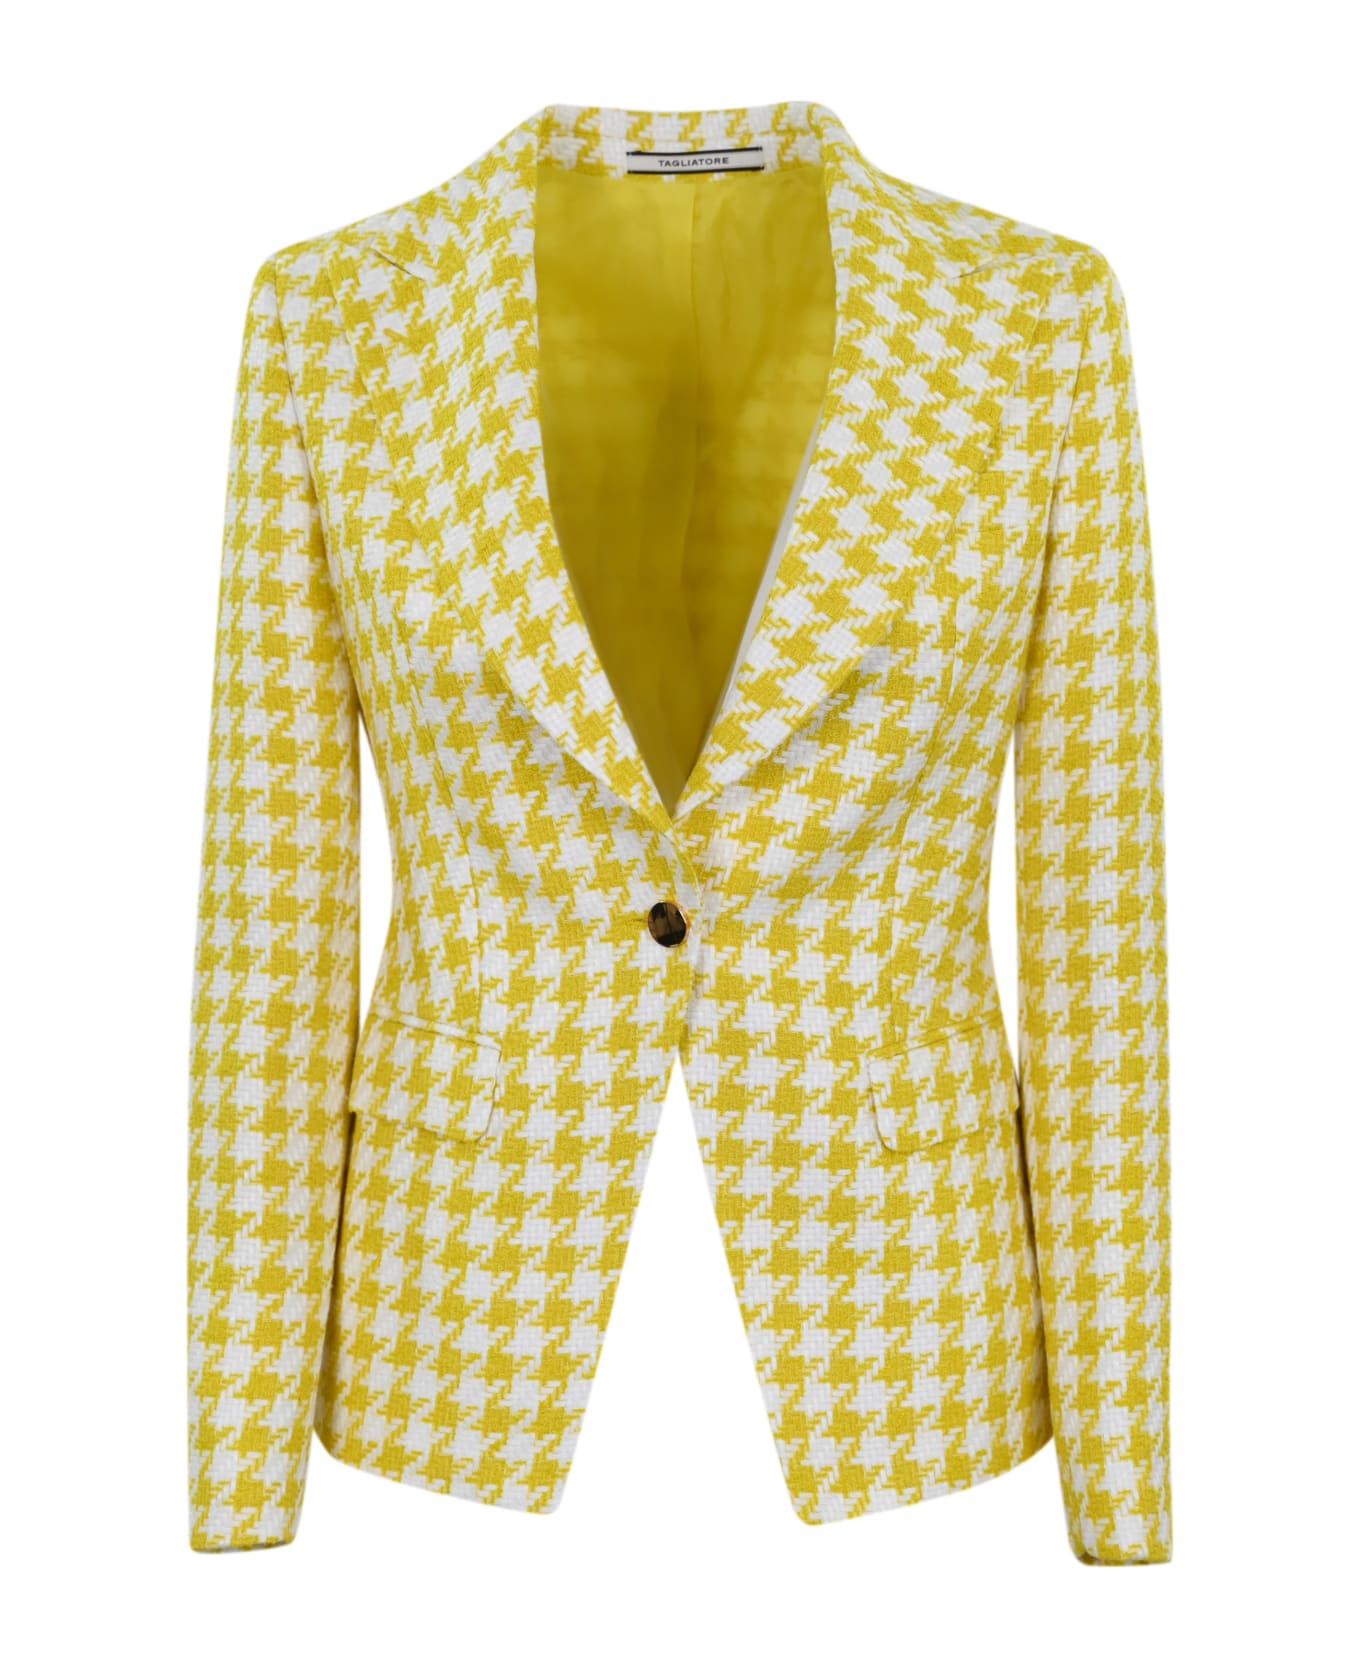 Tagliatore J-liz Yellow White Single-breasted Jacket - Giallo/bianco